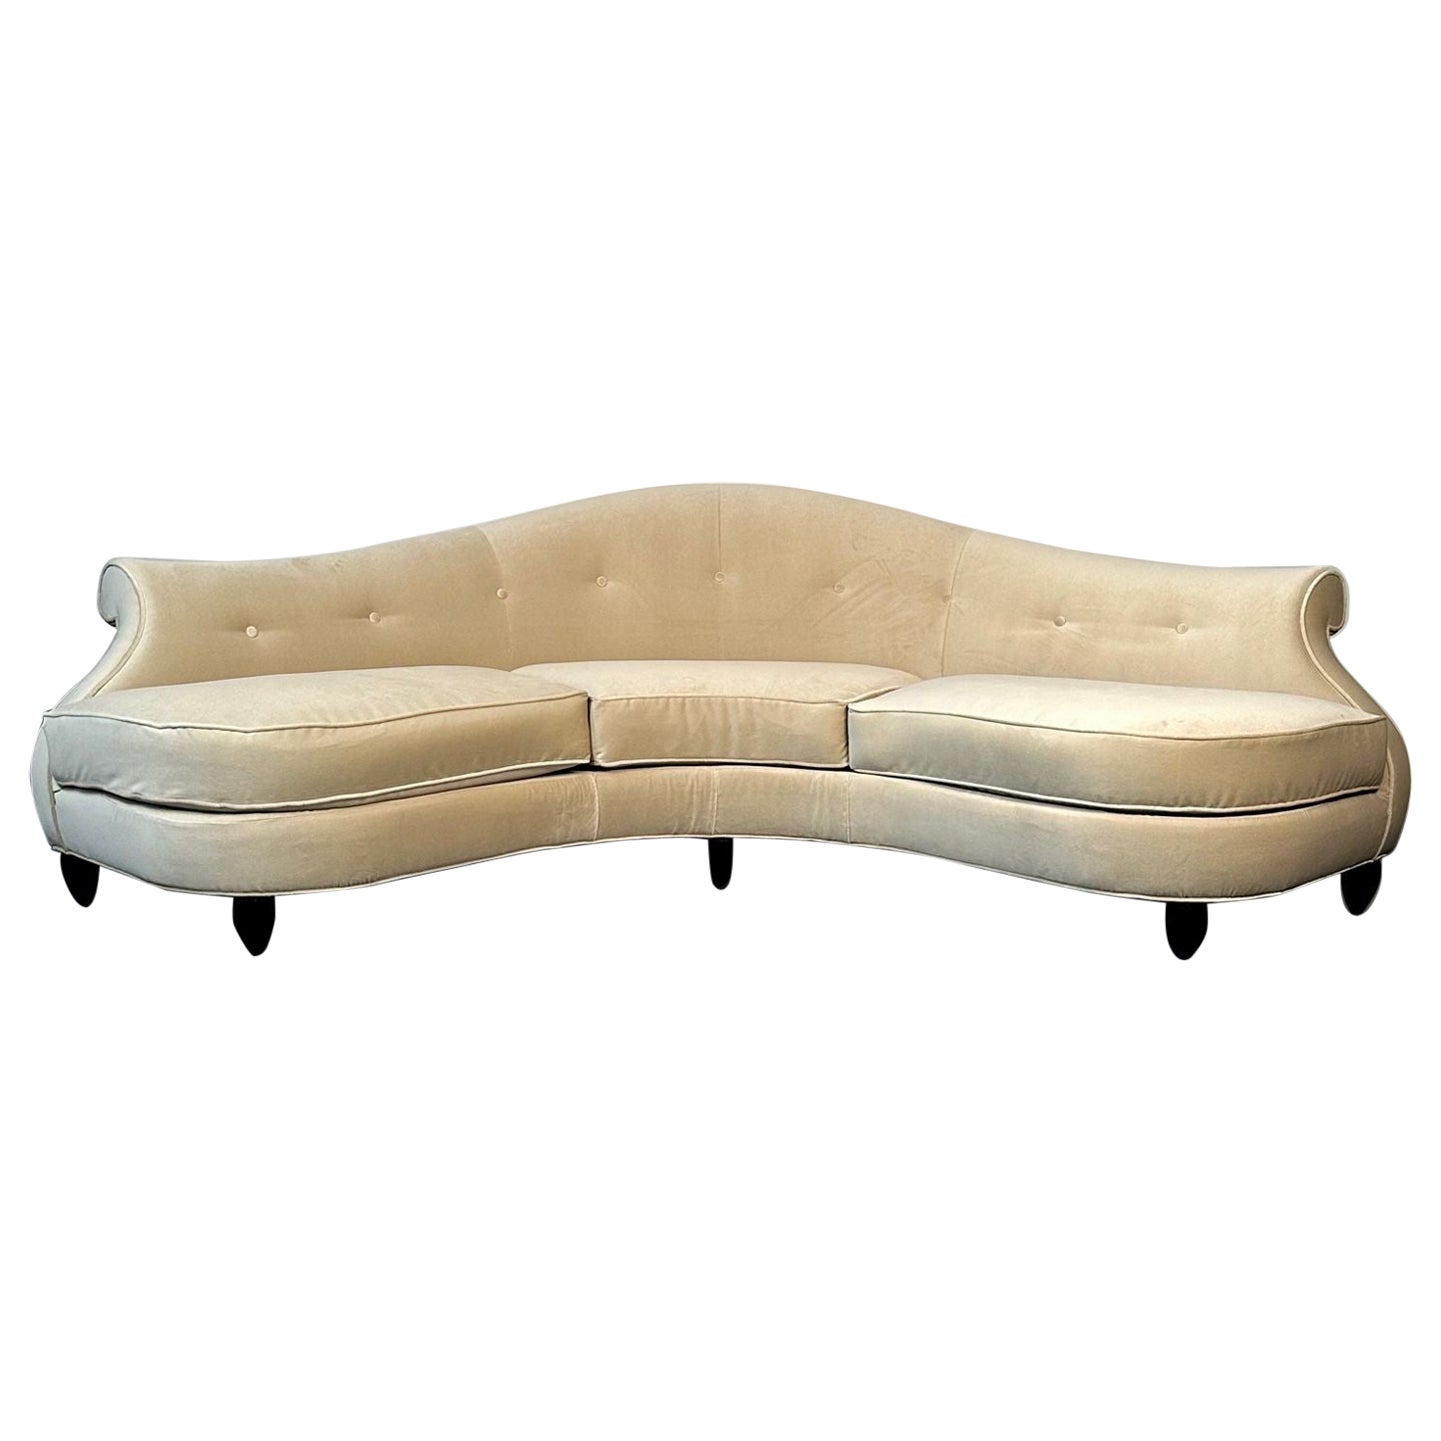 Mid-Century Modern Style Curved Sofa / Settee by Christopher Guy, Velvet